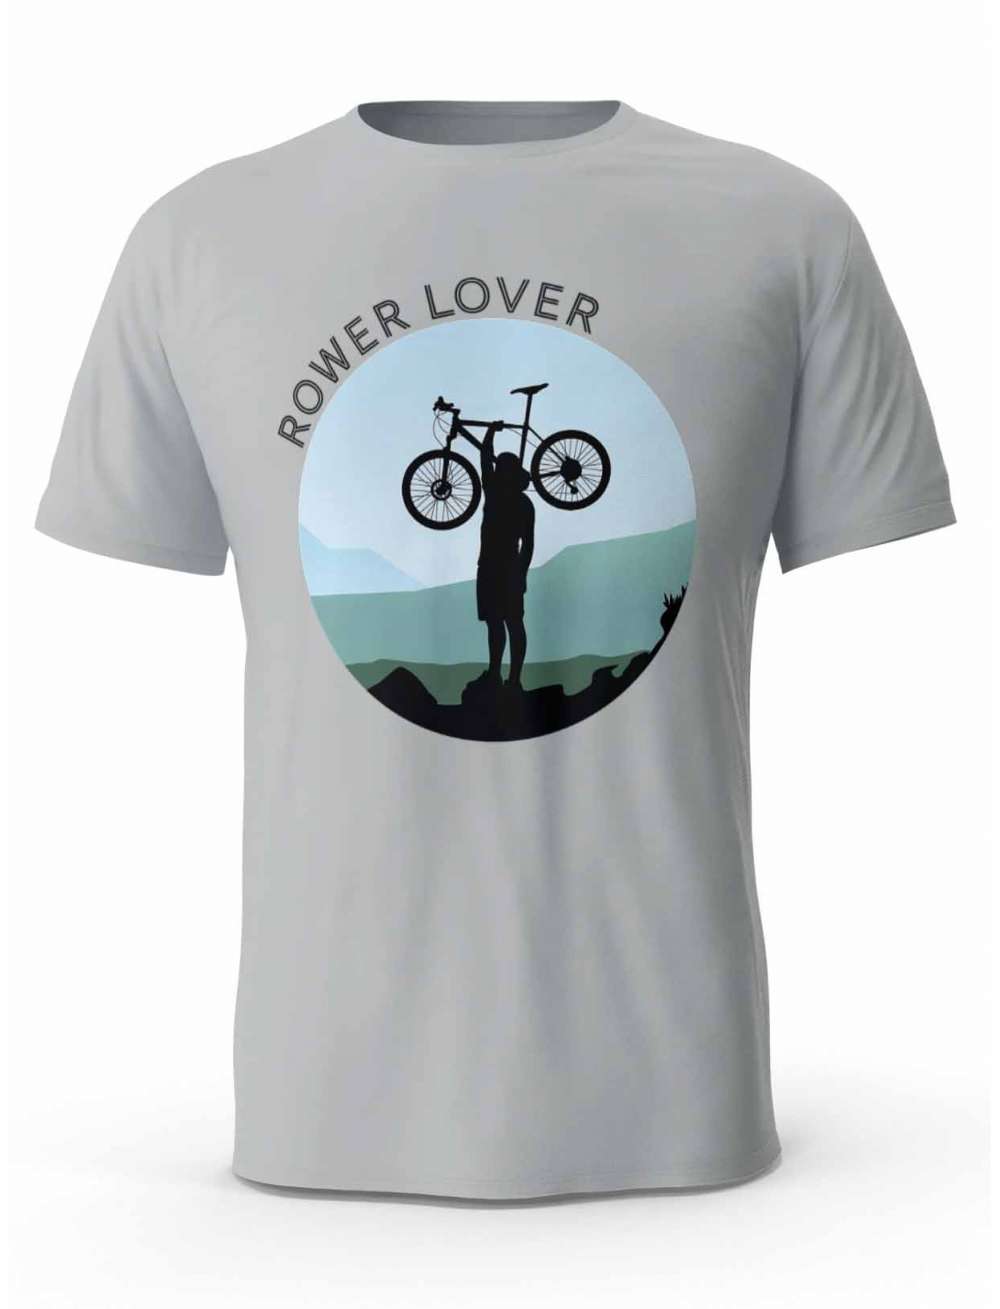 Koszulka Męska, Rower Lover, T-shirt Dla Mężczyzny